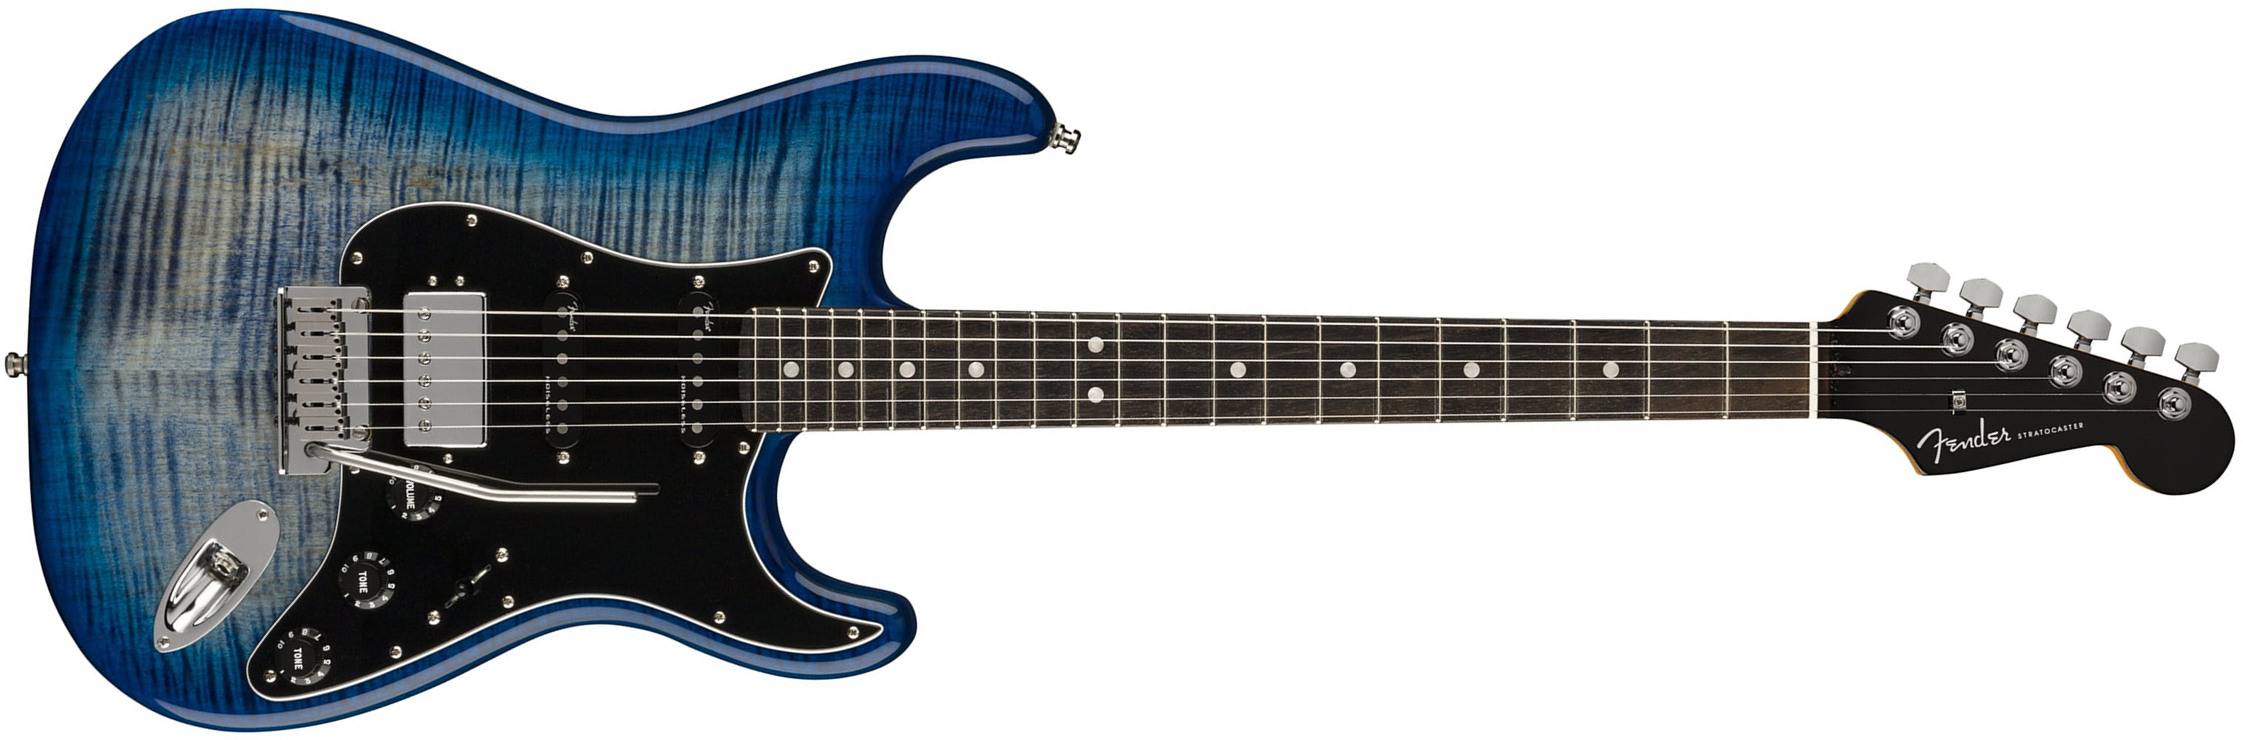 Fender Strat American Ultra Ltd Usa Hss Trem Eb - Denim Burst - E-Gitarre in Str-Form - Main picture